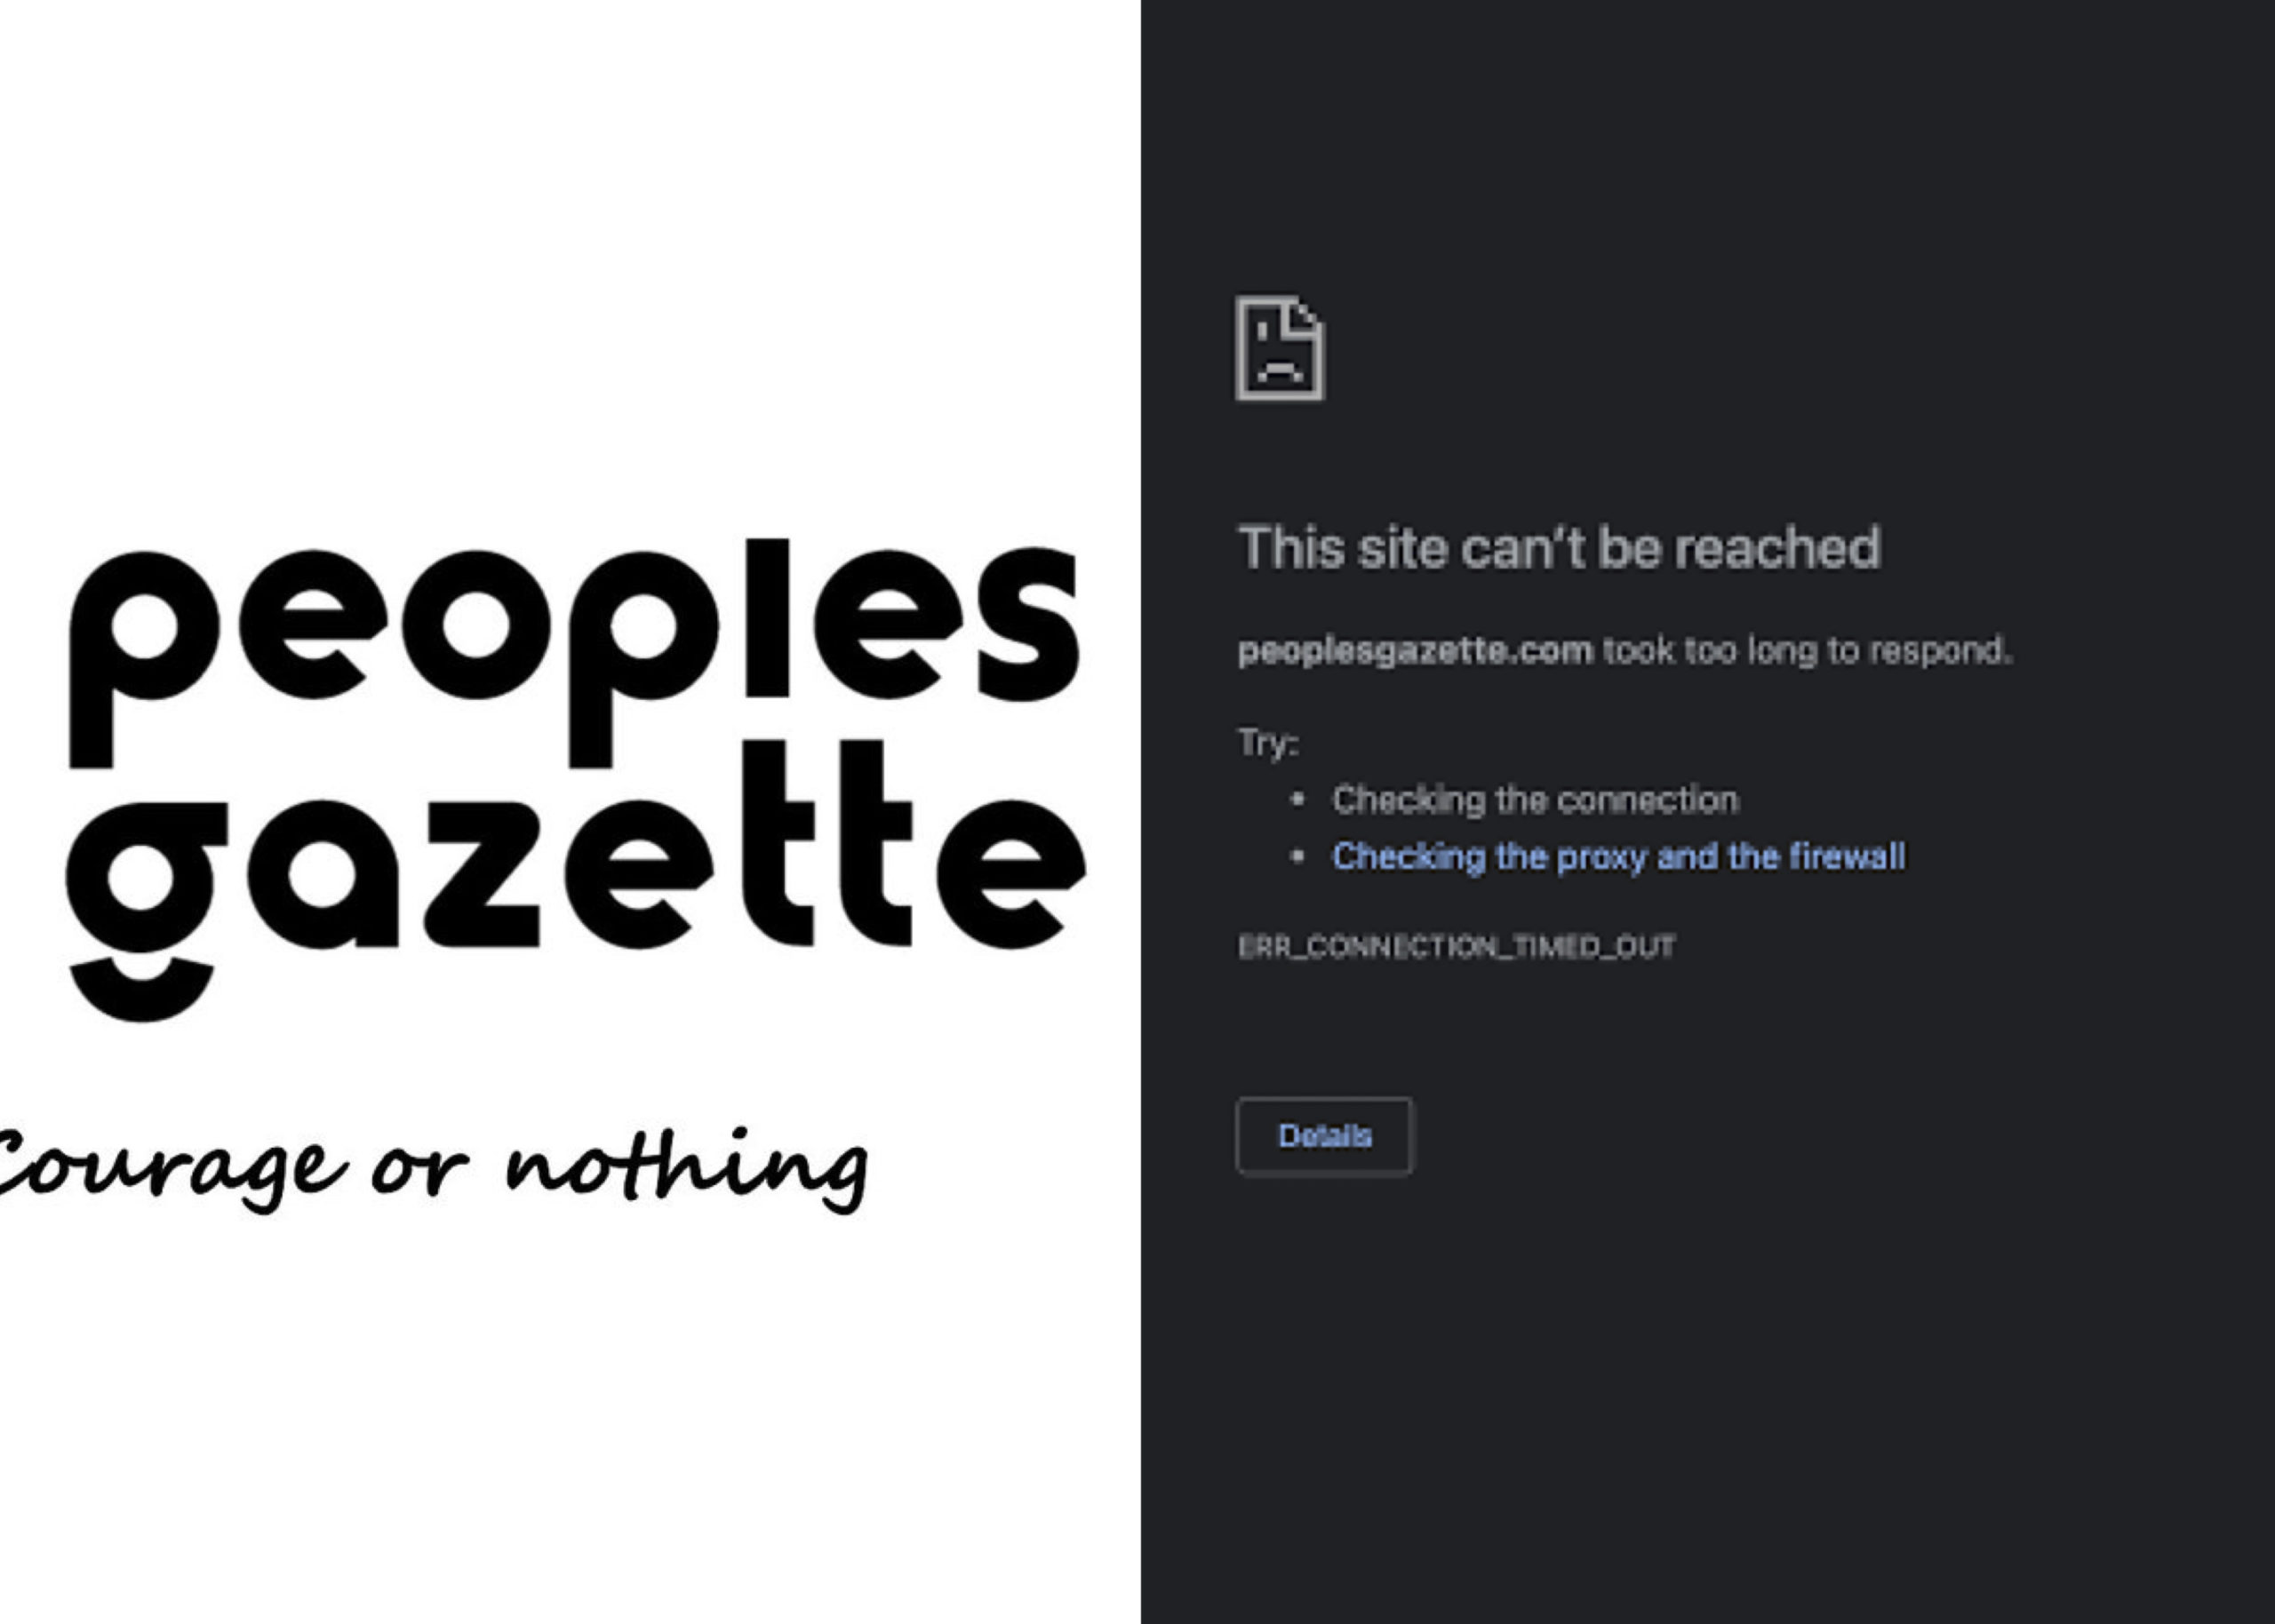 Telecom Networks Restrict Access To Peoples Gazette Website